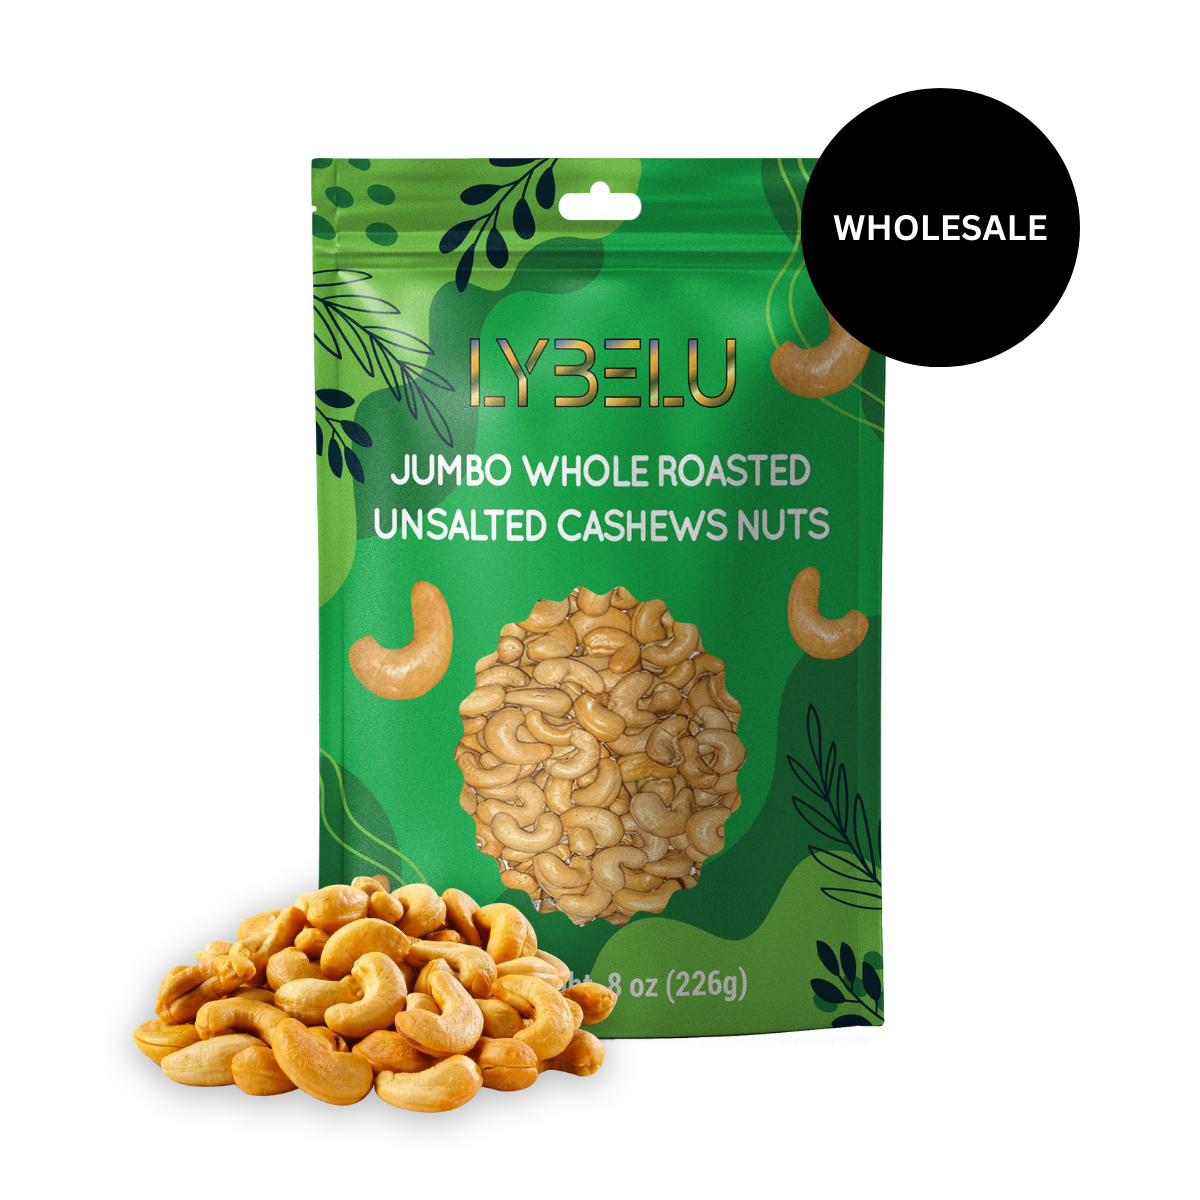 Jumbo Whole Roasted Unsalted Cashews Nuts – 8oz